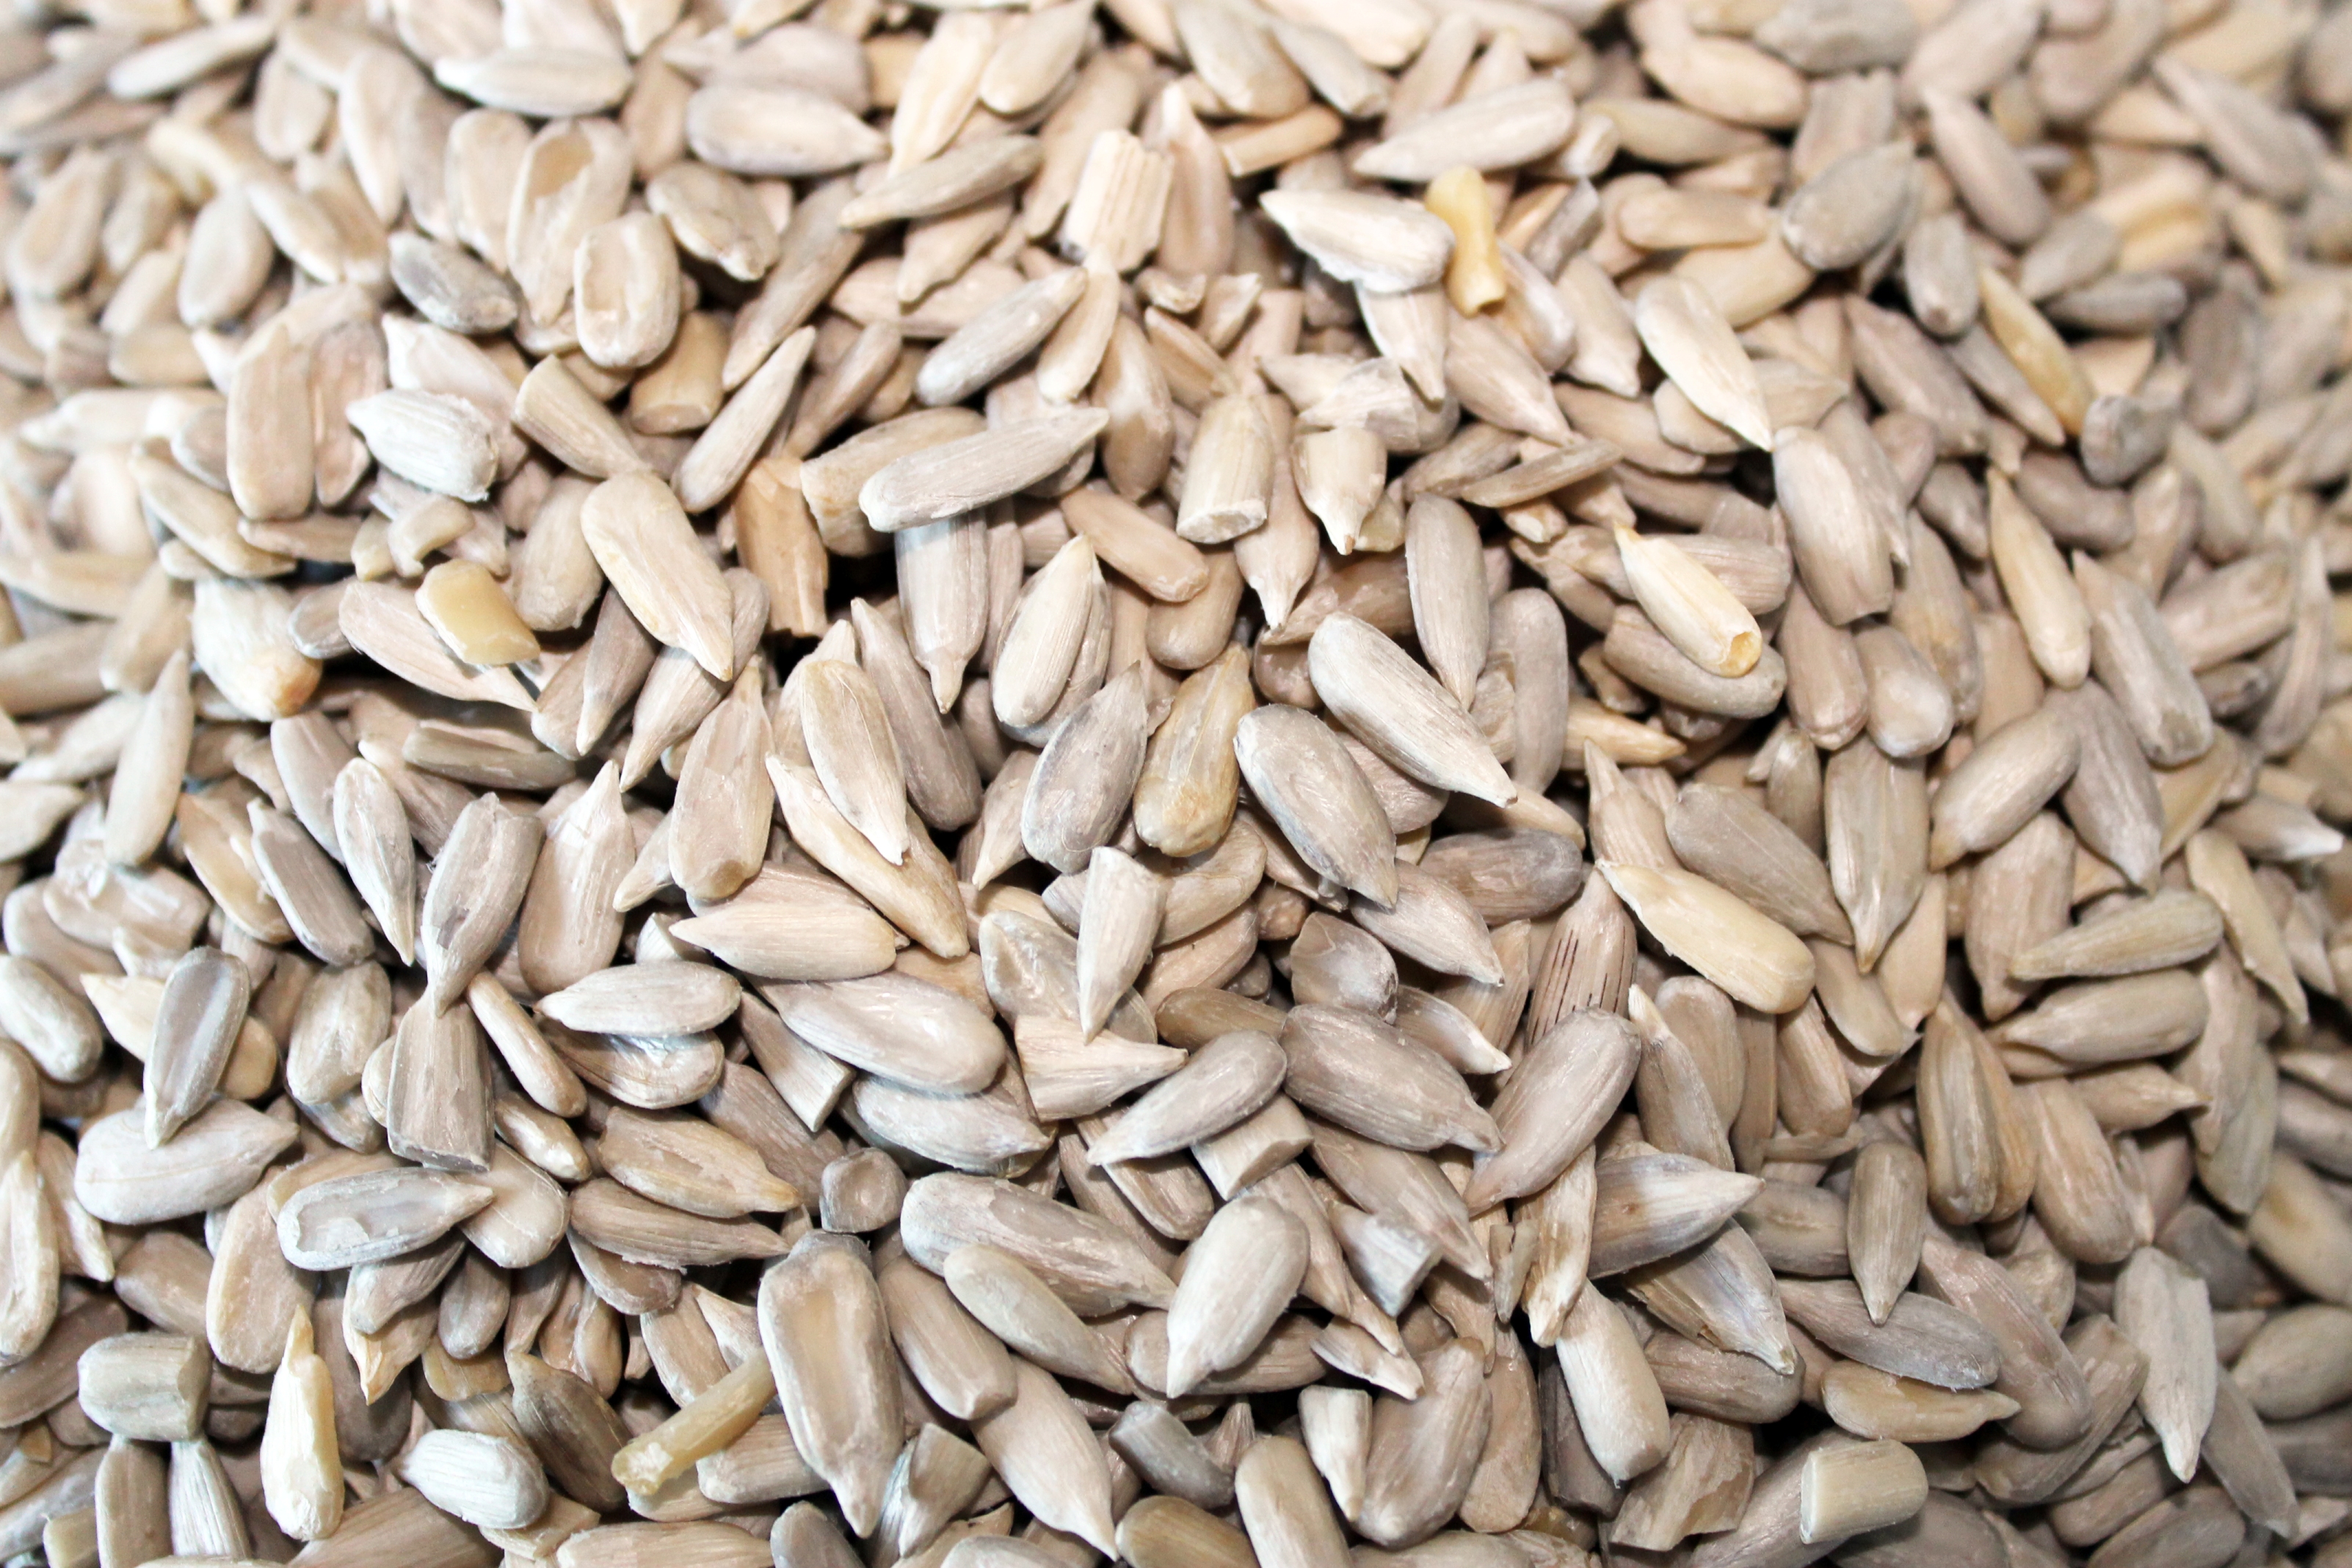 Raw Shelled Sunflower Seed Kernels - Allergy Friendly Foods - MyGerbs